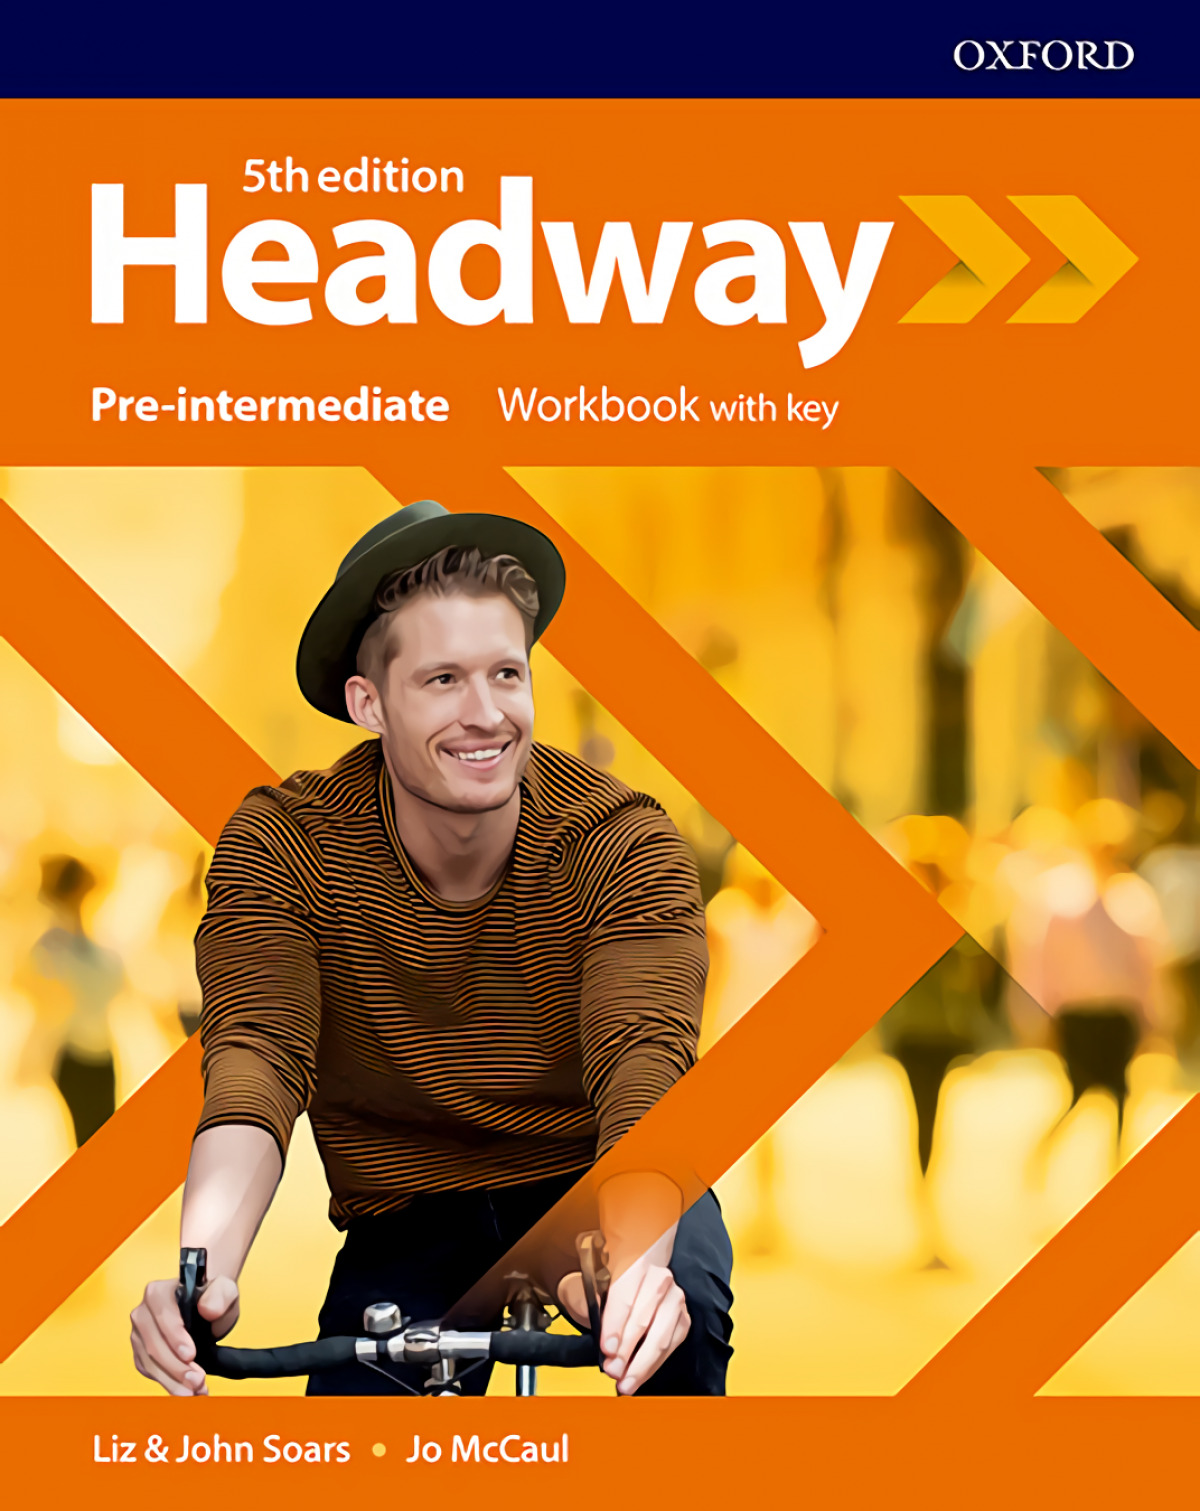 Headway pre intermediate workbook with key fifth edition - Soars, Liz & John / Mccaul